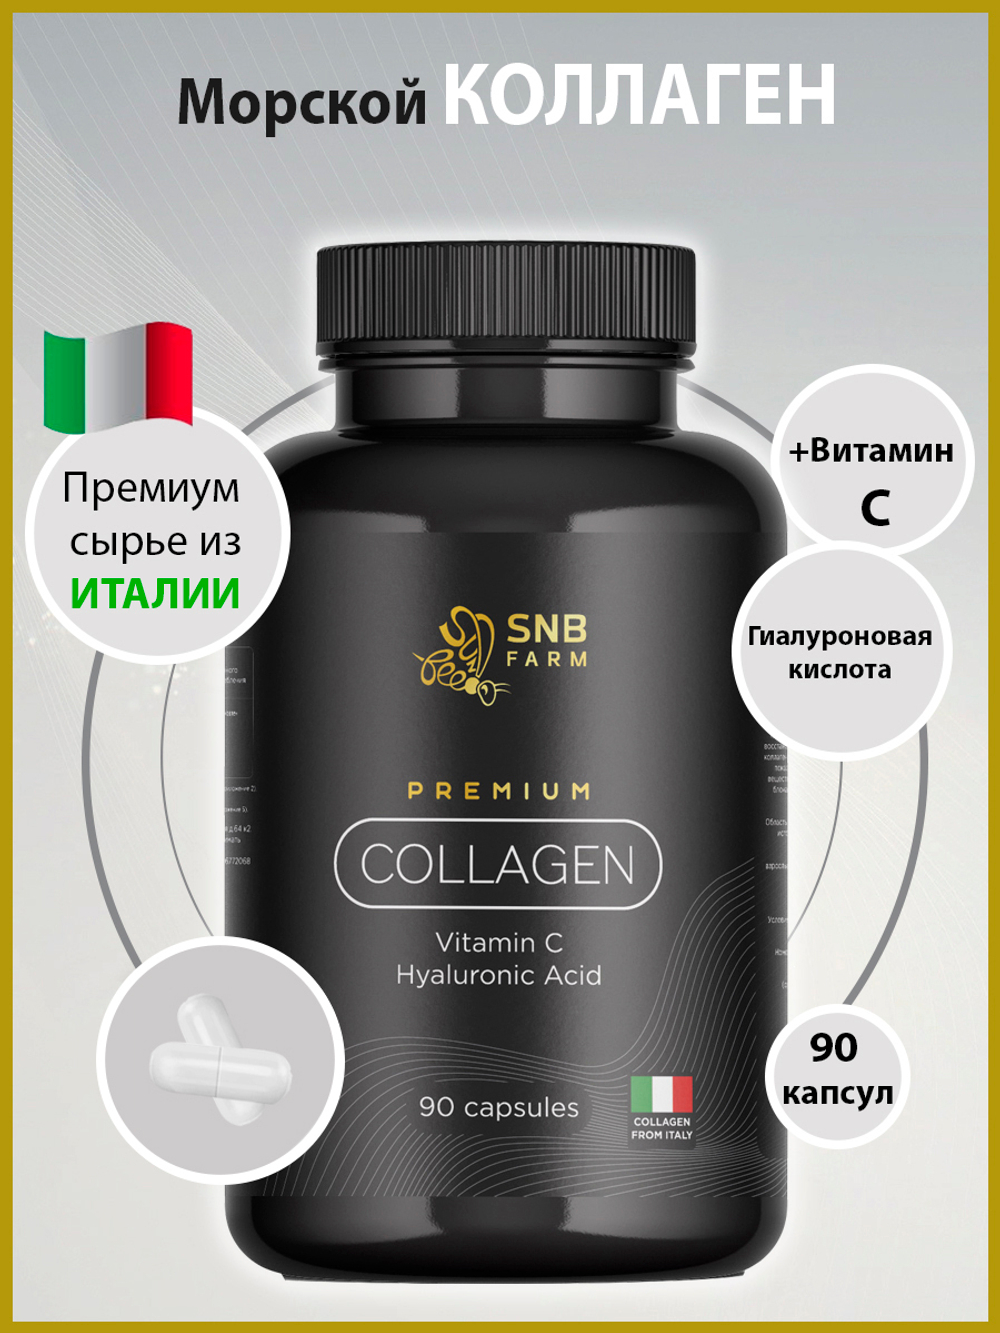 Collagen + Vitamin C + Hyaluronic acid